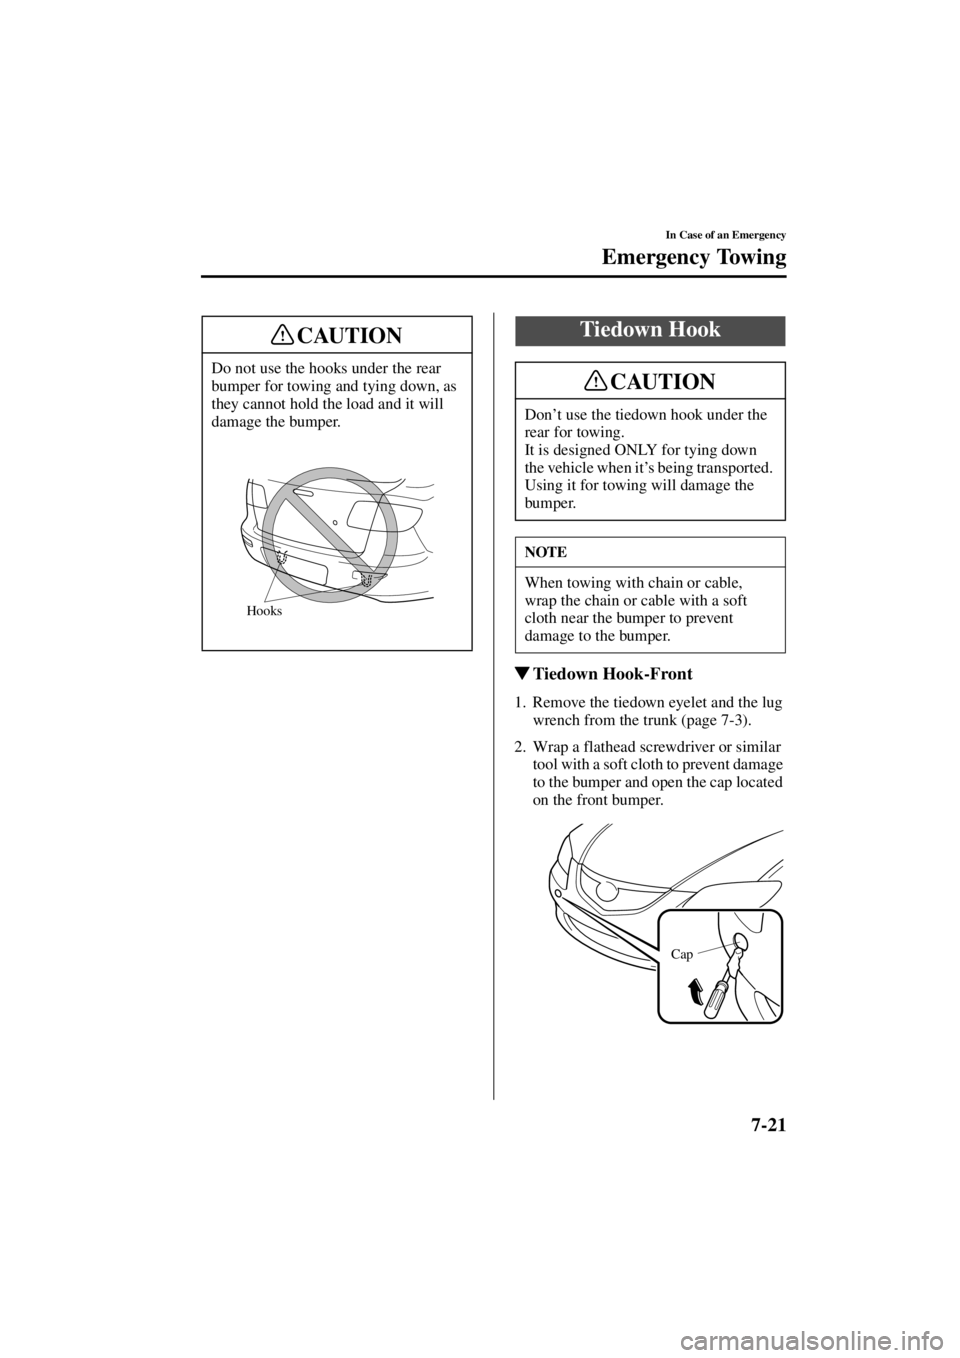 MAZDA MODEL 3 5-DOOR 2004 User Guide 7-21
In Case of an Emergency
Emergency Towing
Form No. 8S18-EA-03I
Tiedown Hook-Front
1. Remove the tiedown eyelet and the lug 
wrench from the trunk (page 7-3).
2. Wrap a flathead screwdriver or sim